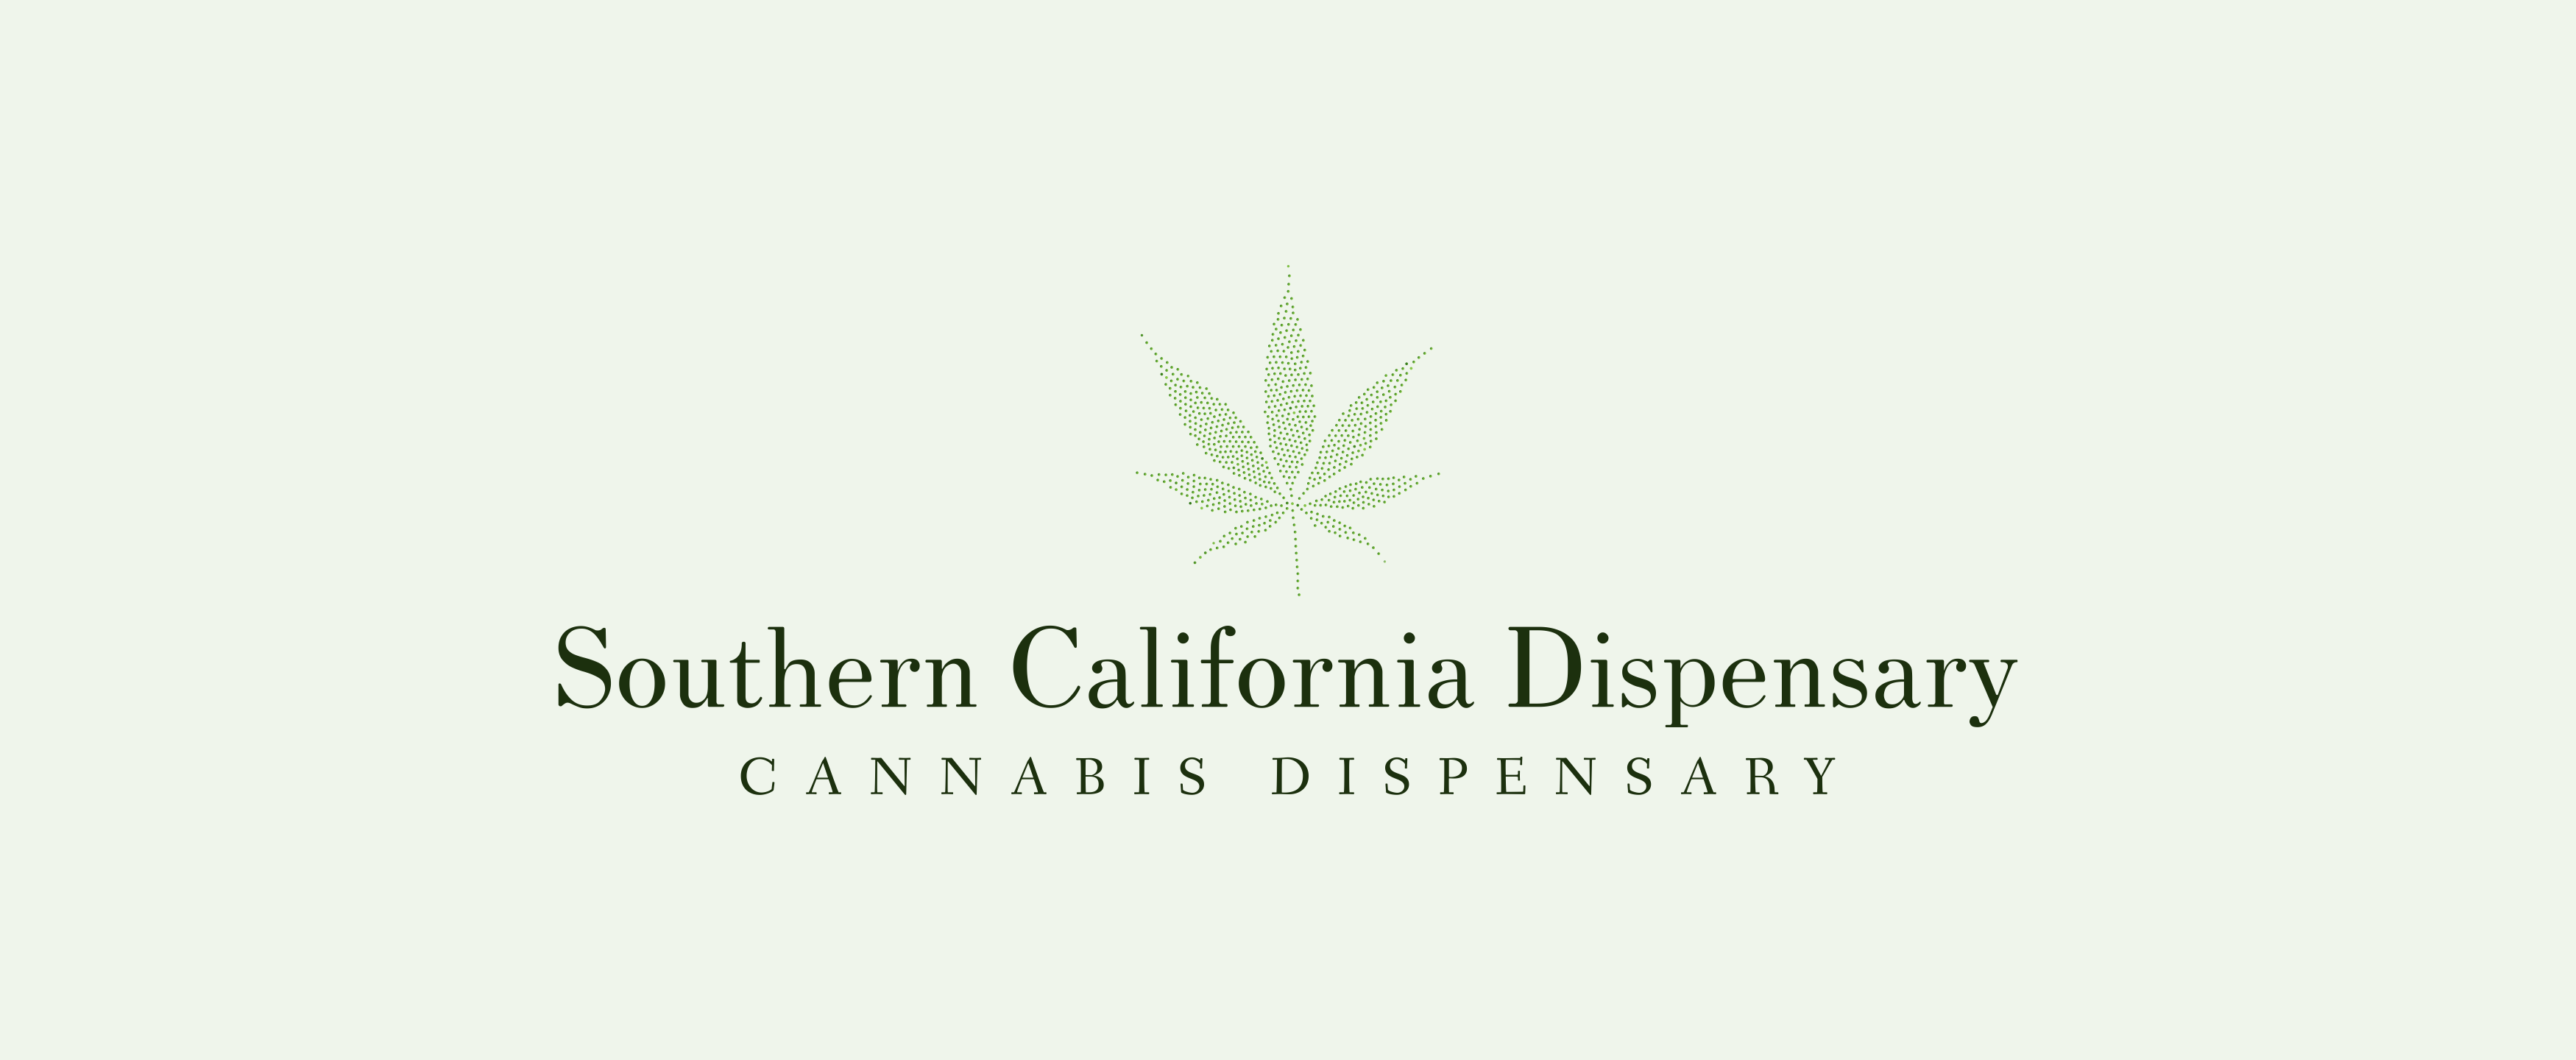 Southern California Dispensary